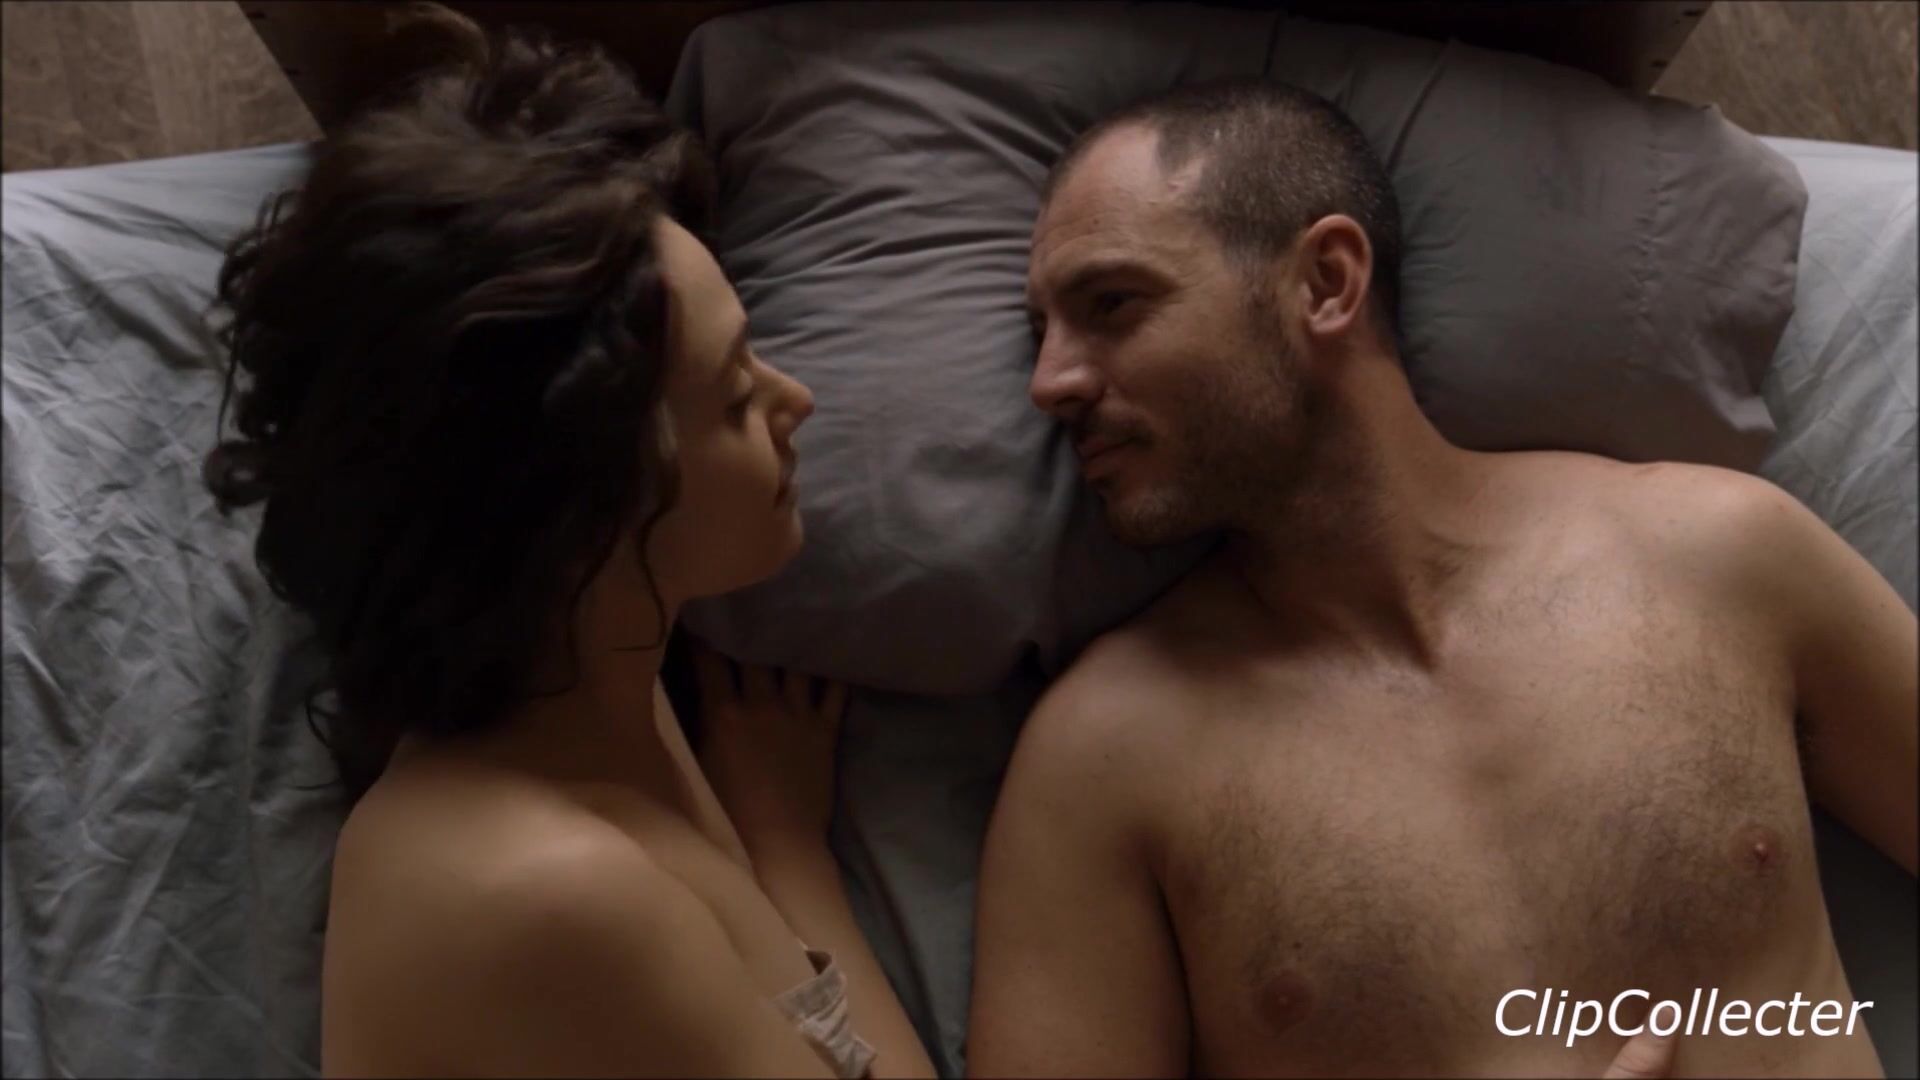 Cuckolding Hot nude interracial scenes with hot girls from erotic TV series Shameless (season 8) Italiana